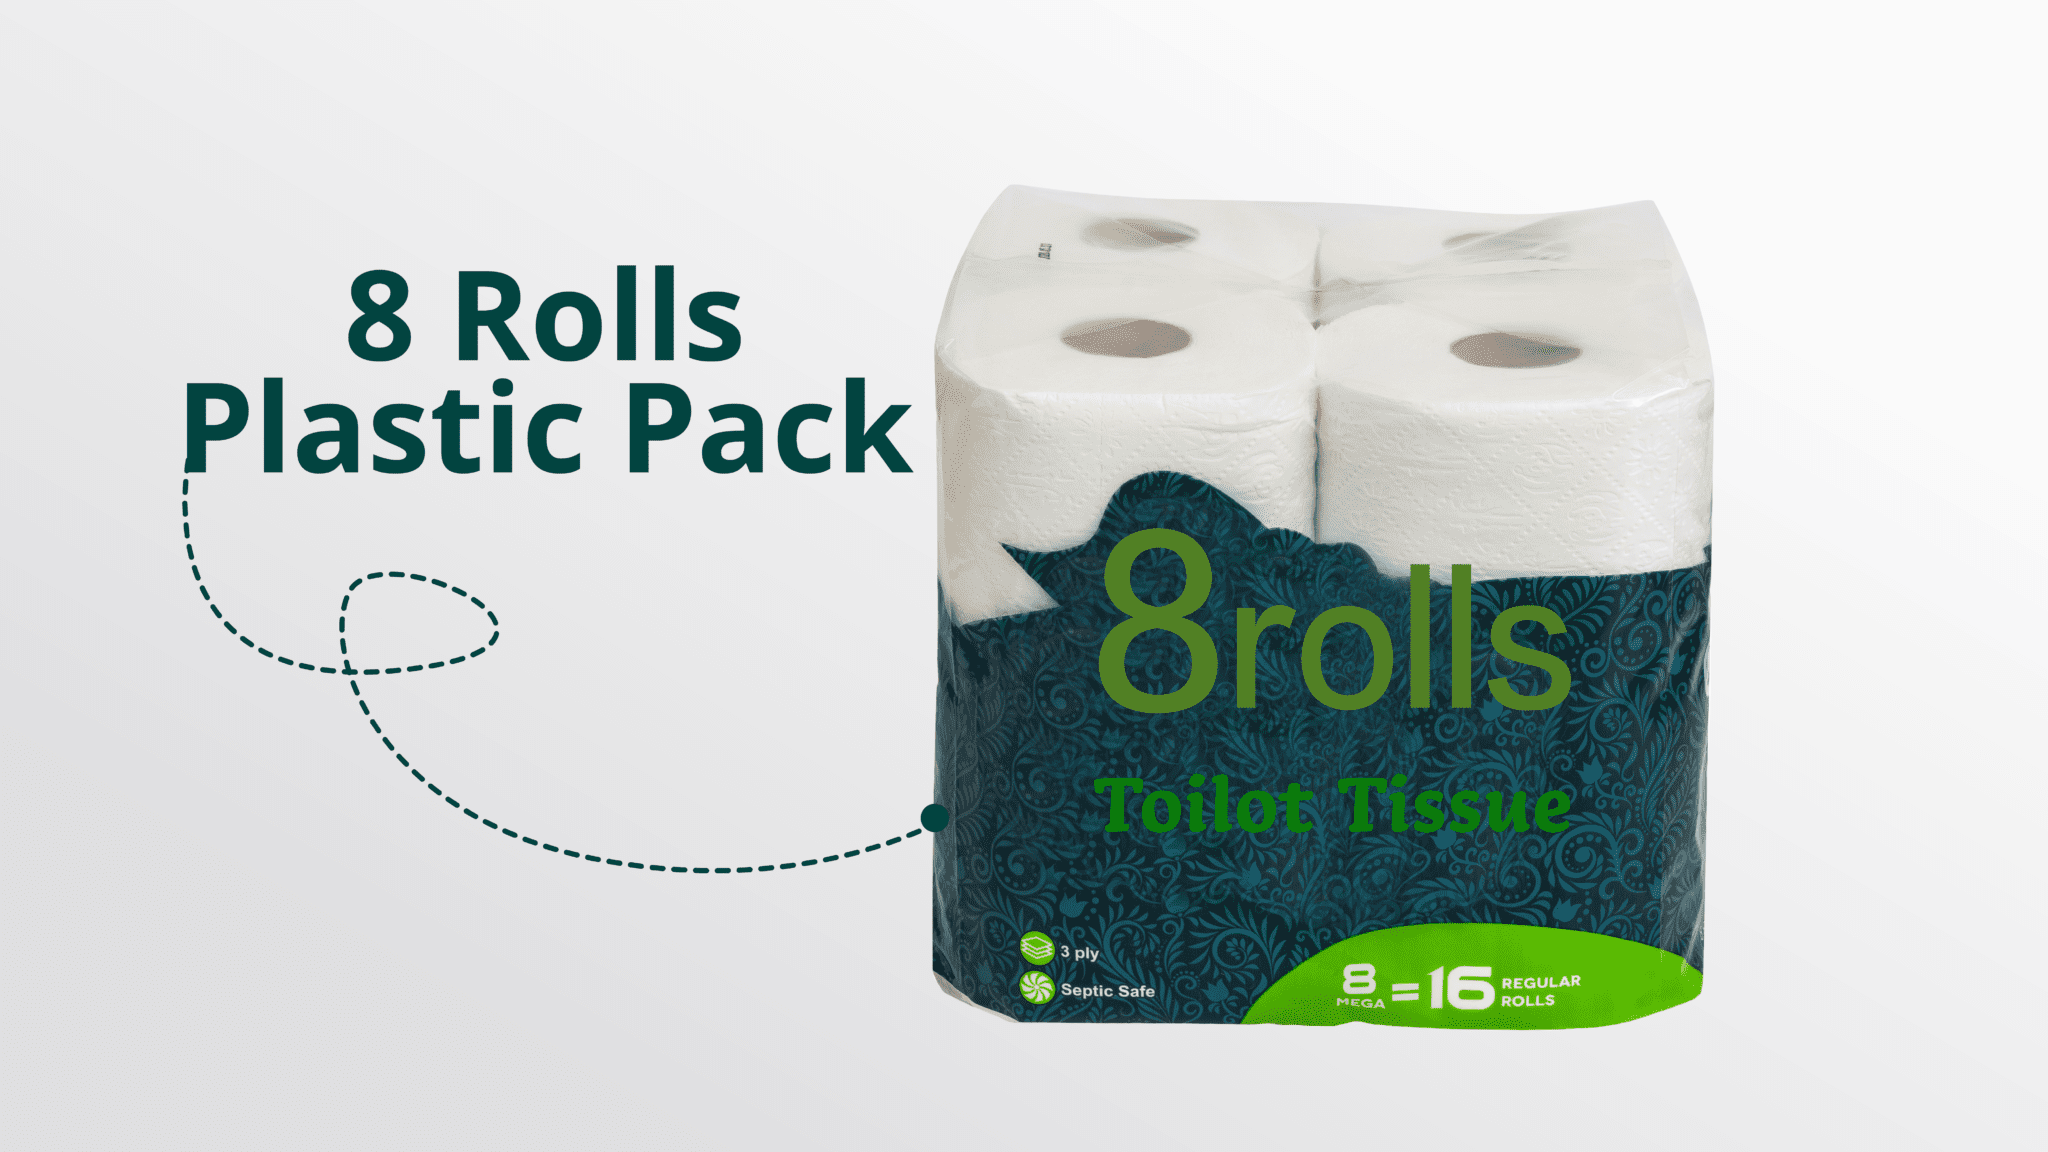 8 rolls plastic pack toilet paper